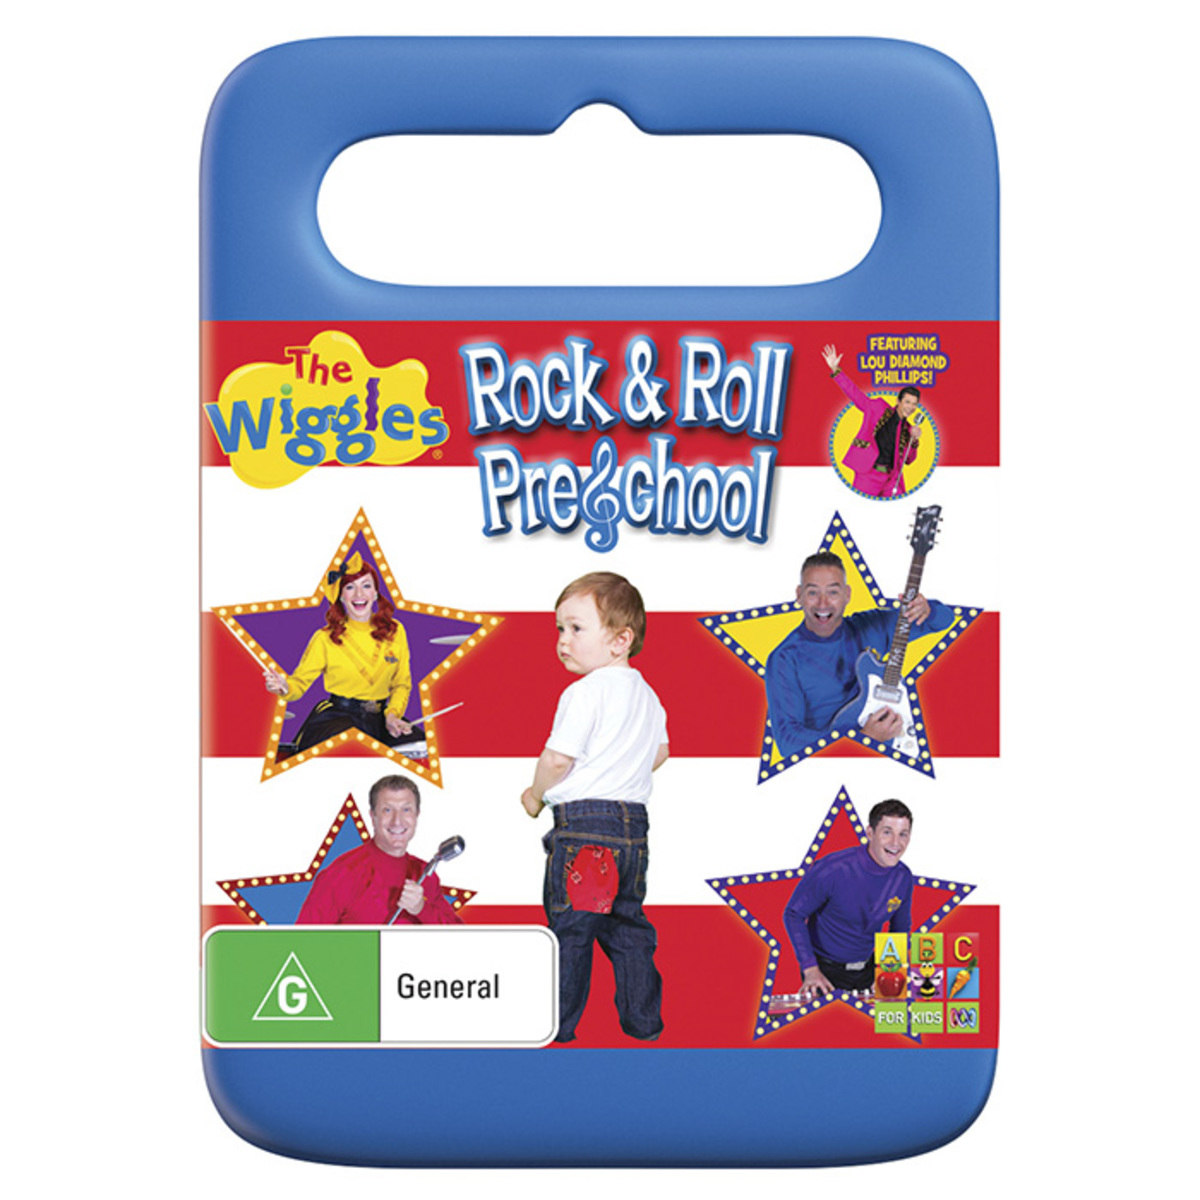 The Wiggles: Rock & Roll Preschool - DVD